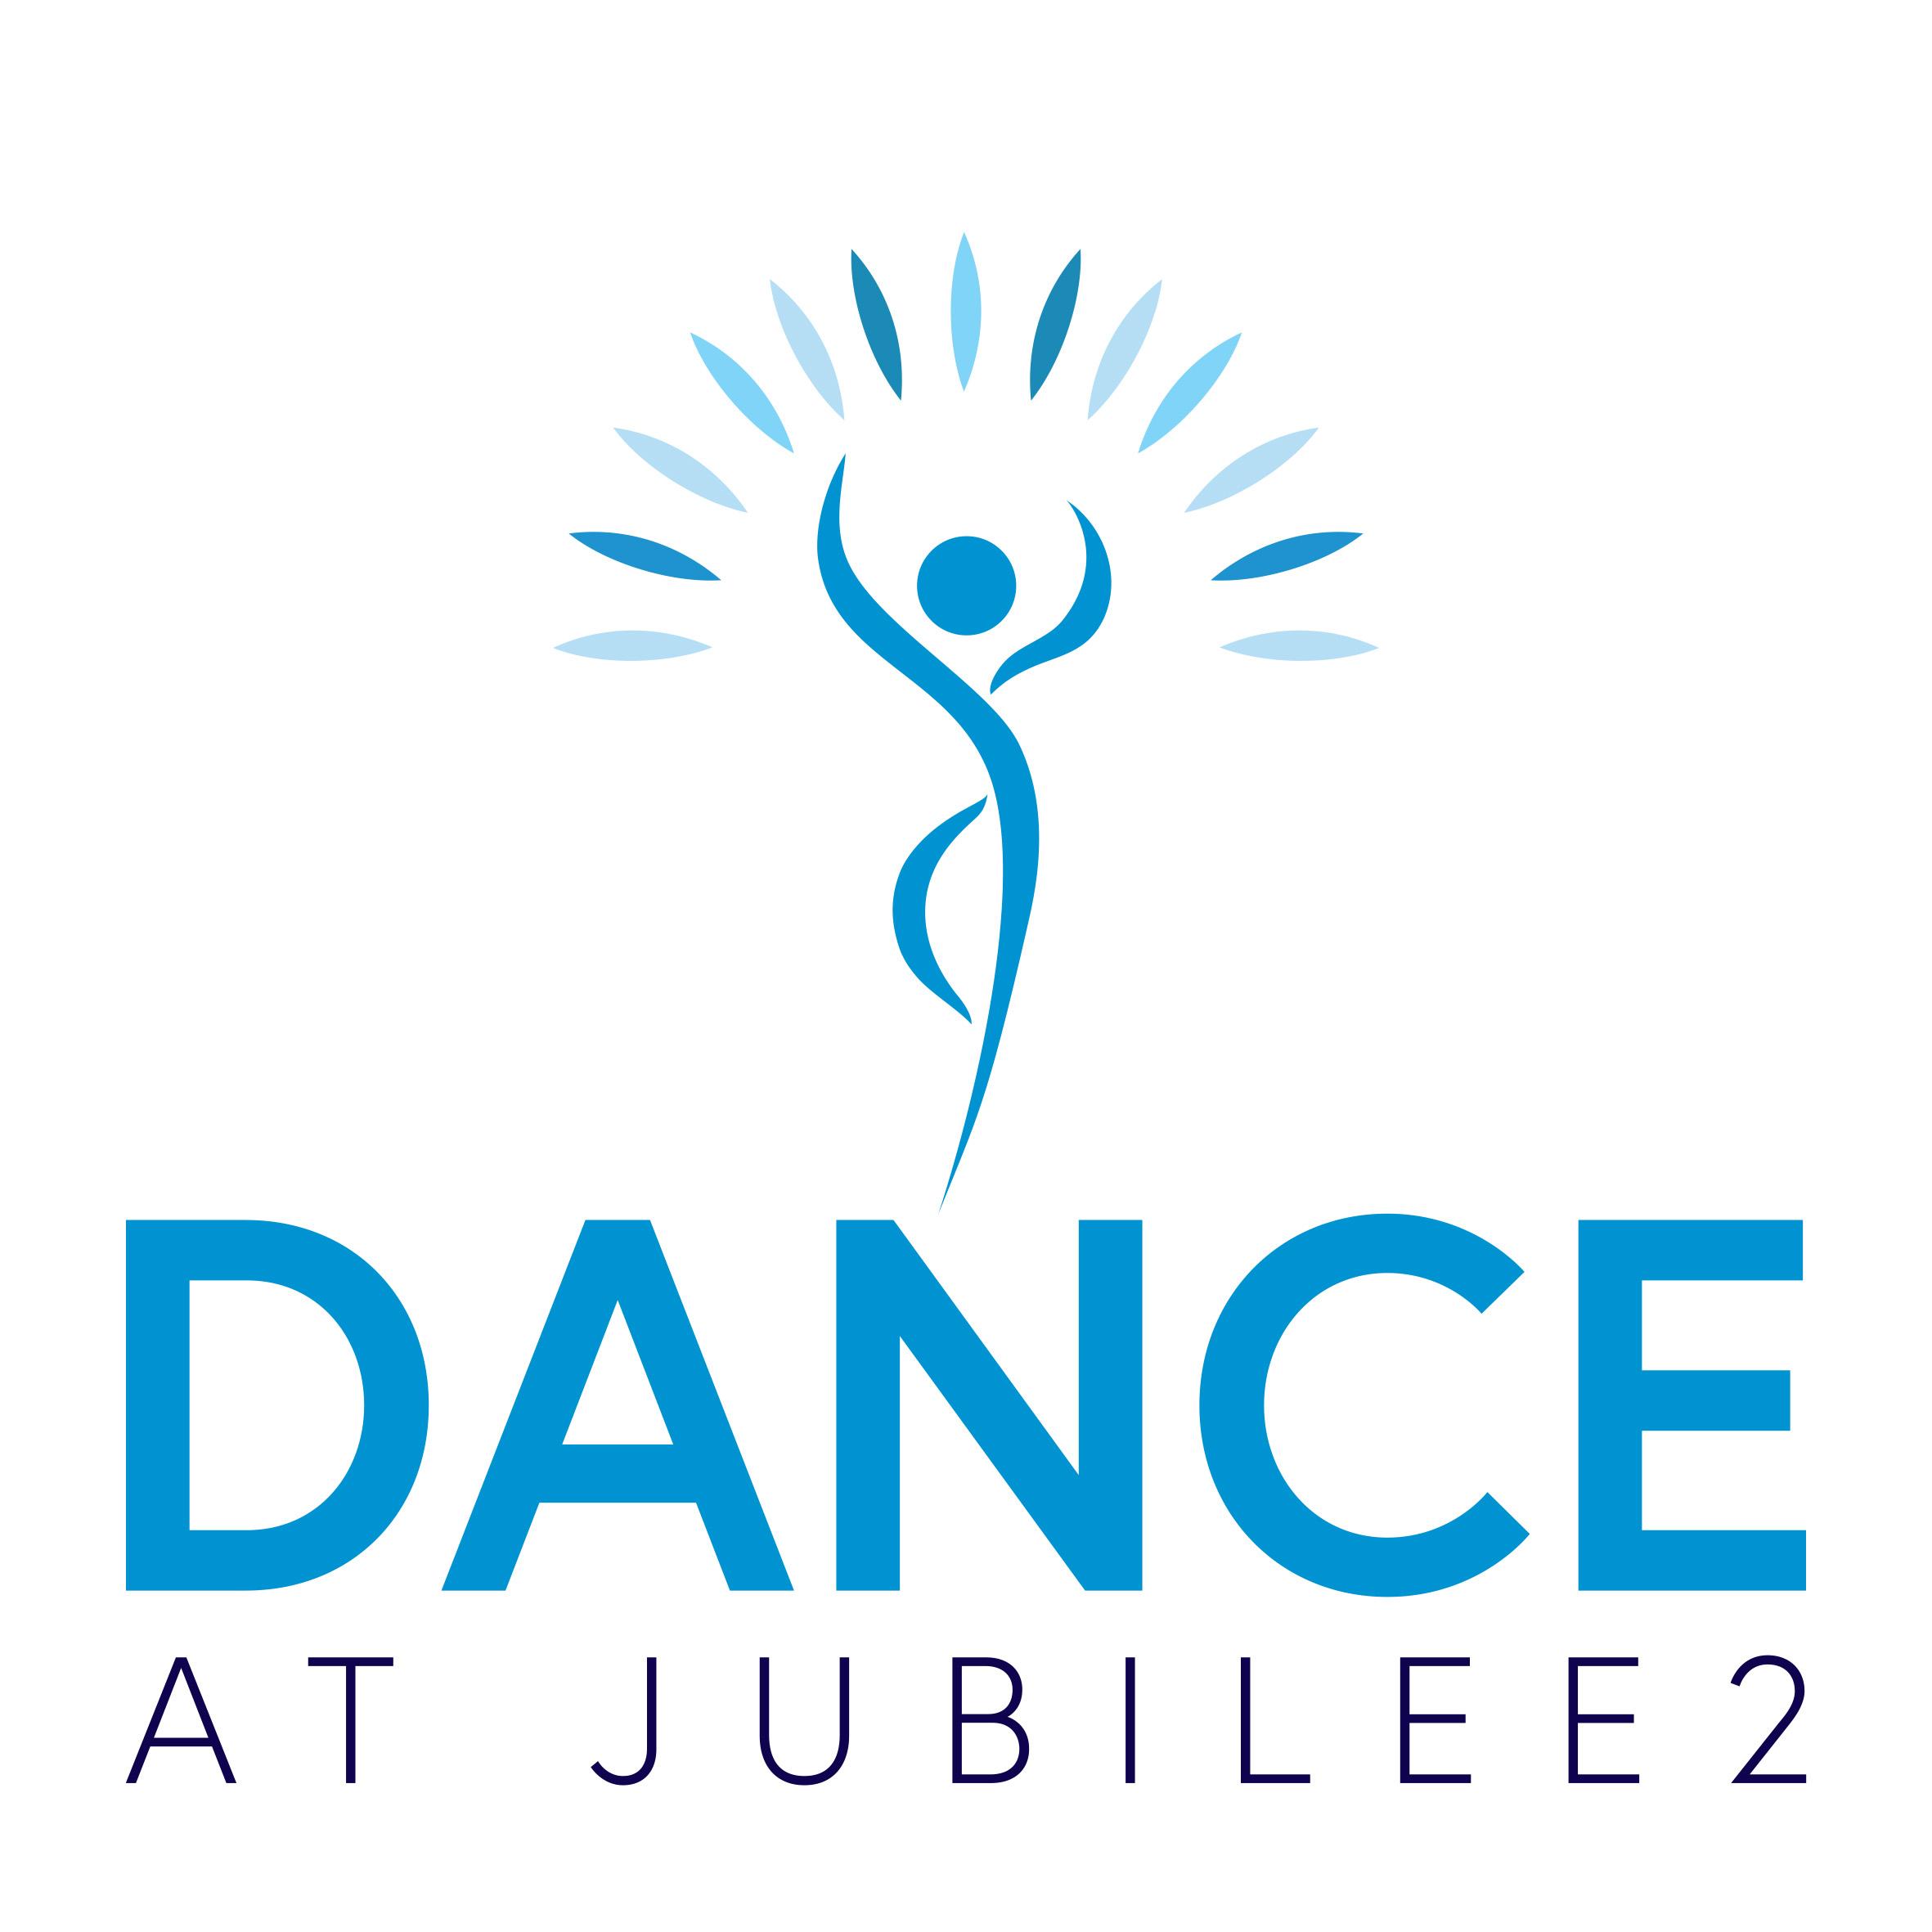 Dance at jubilee2 logo